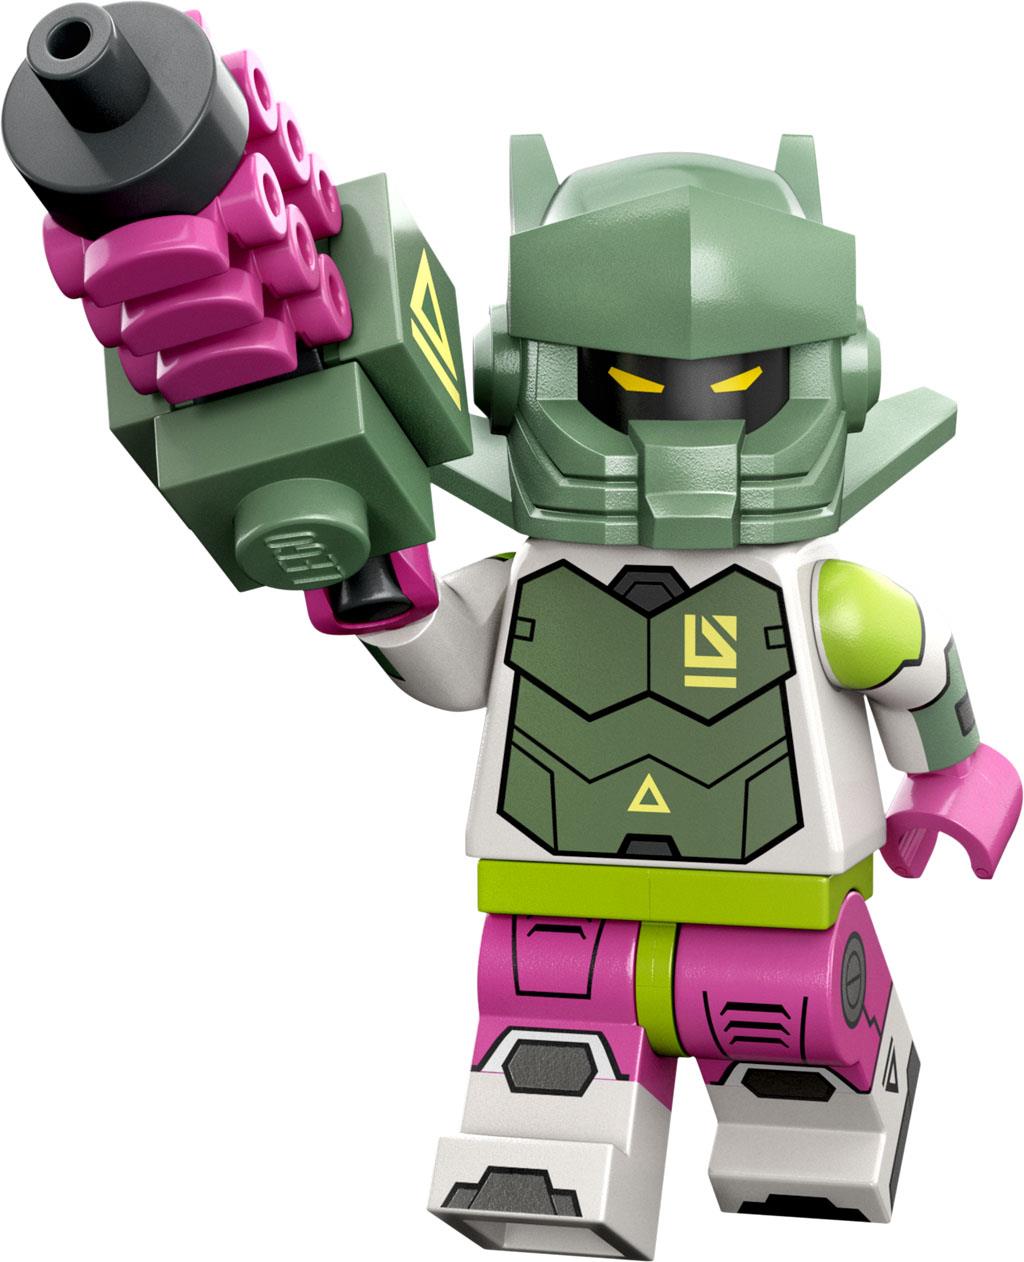 LEGO Robot Warrior Minifigure - Brick Land